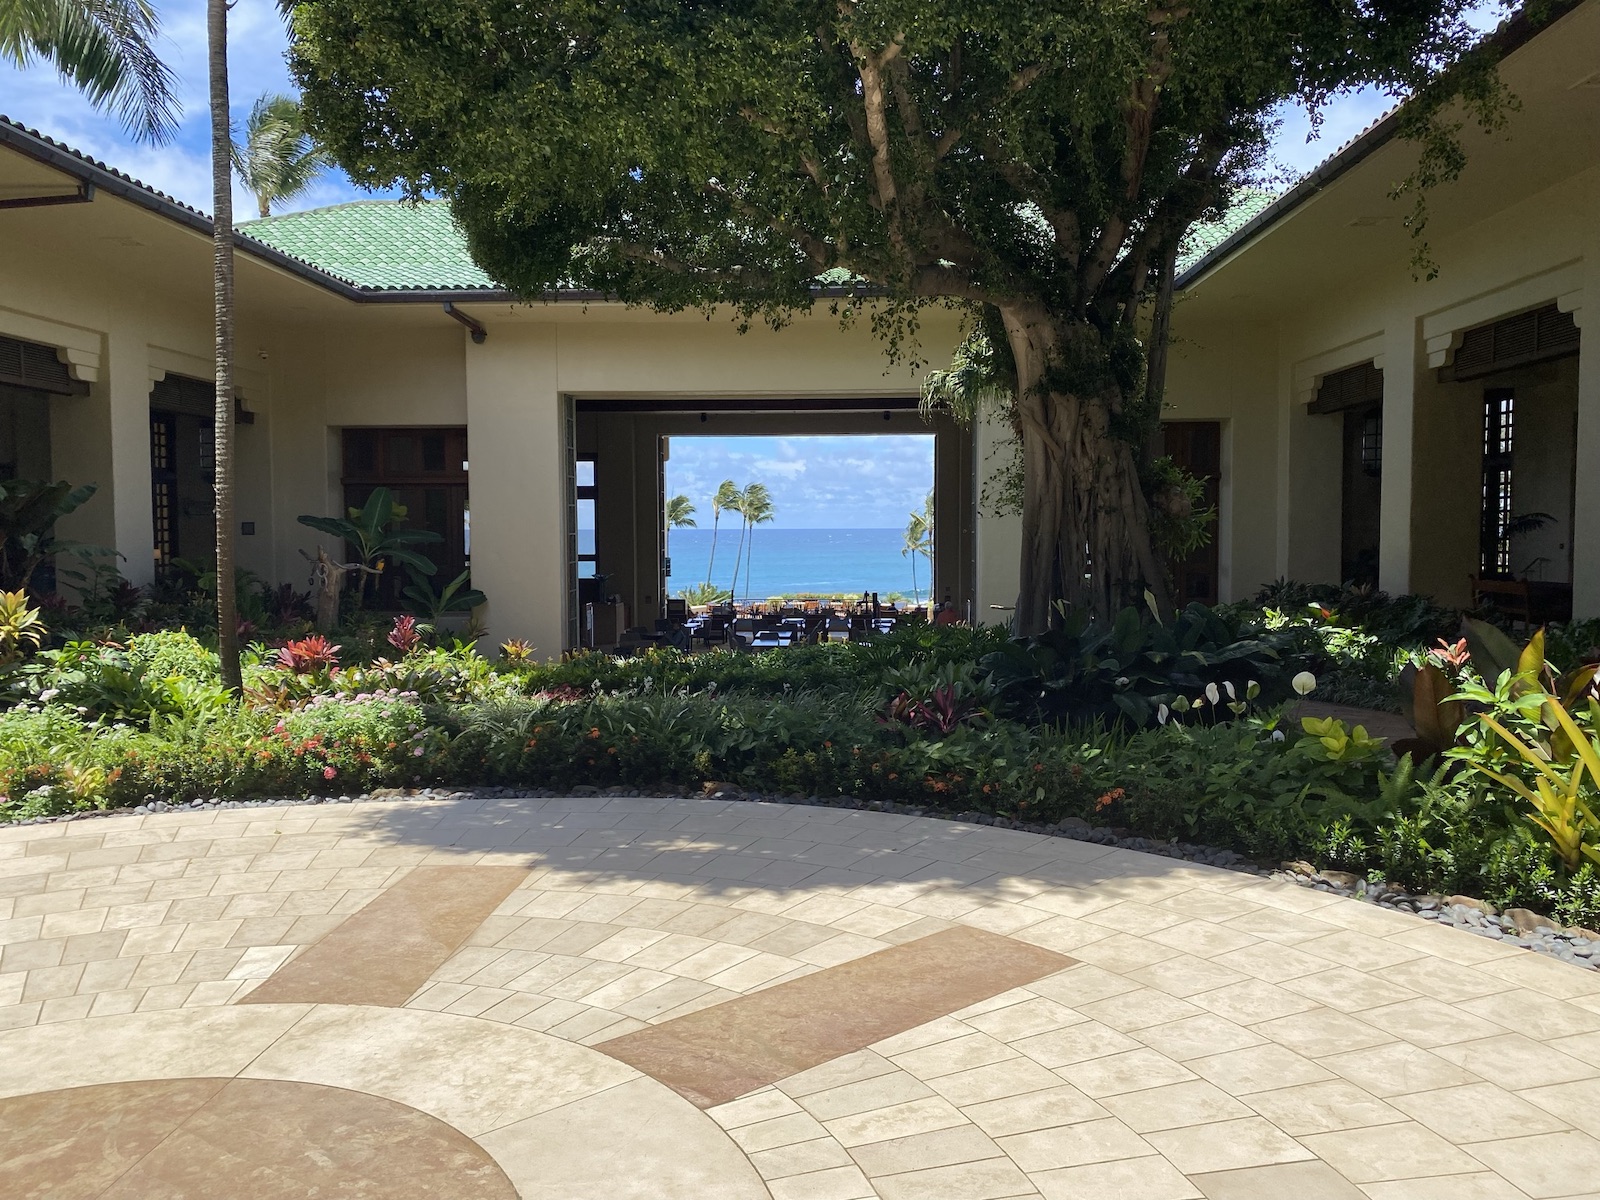 Grand Hyatt Kauai Review - Guest Review Of This Oceanfront Resort